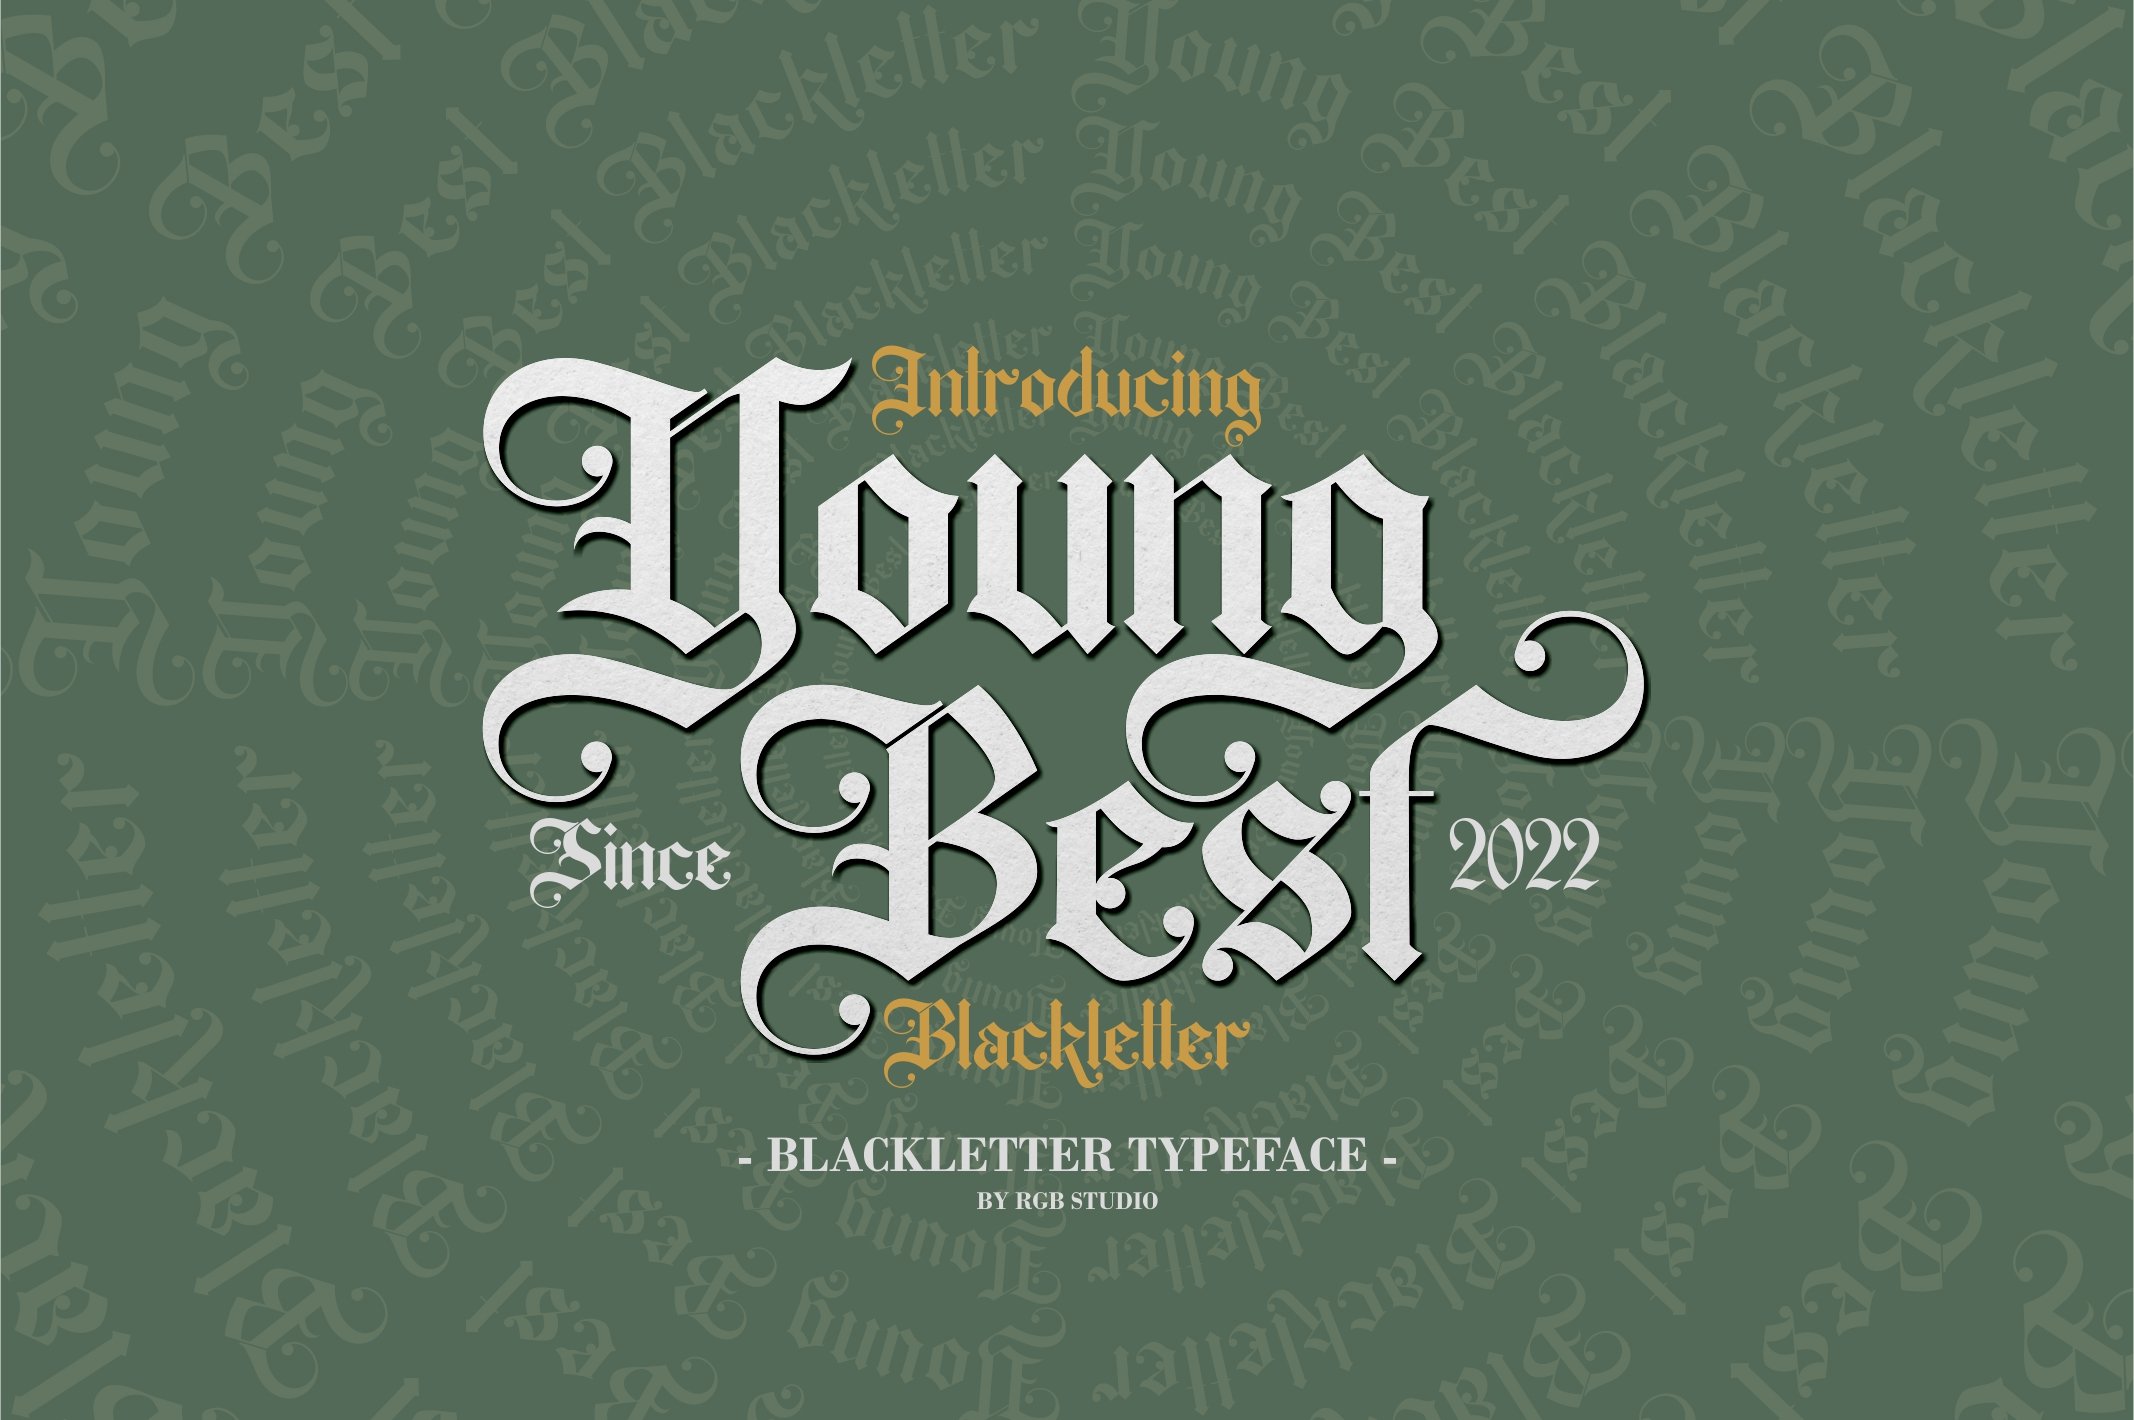 Young Best - Blackletter Font cover image.